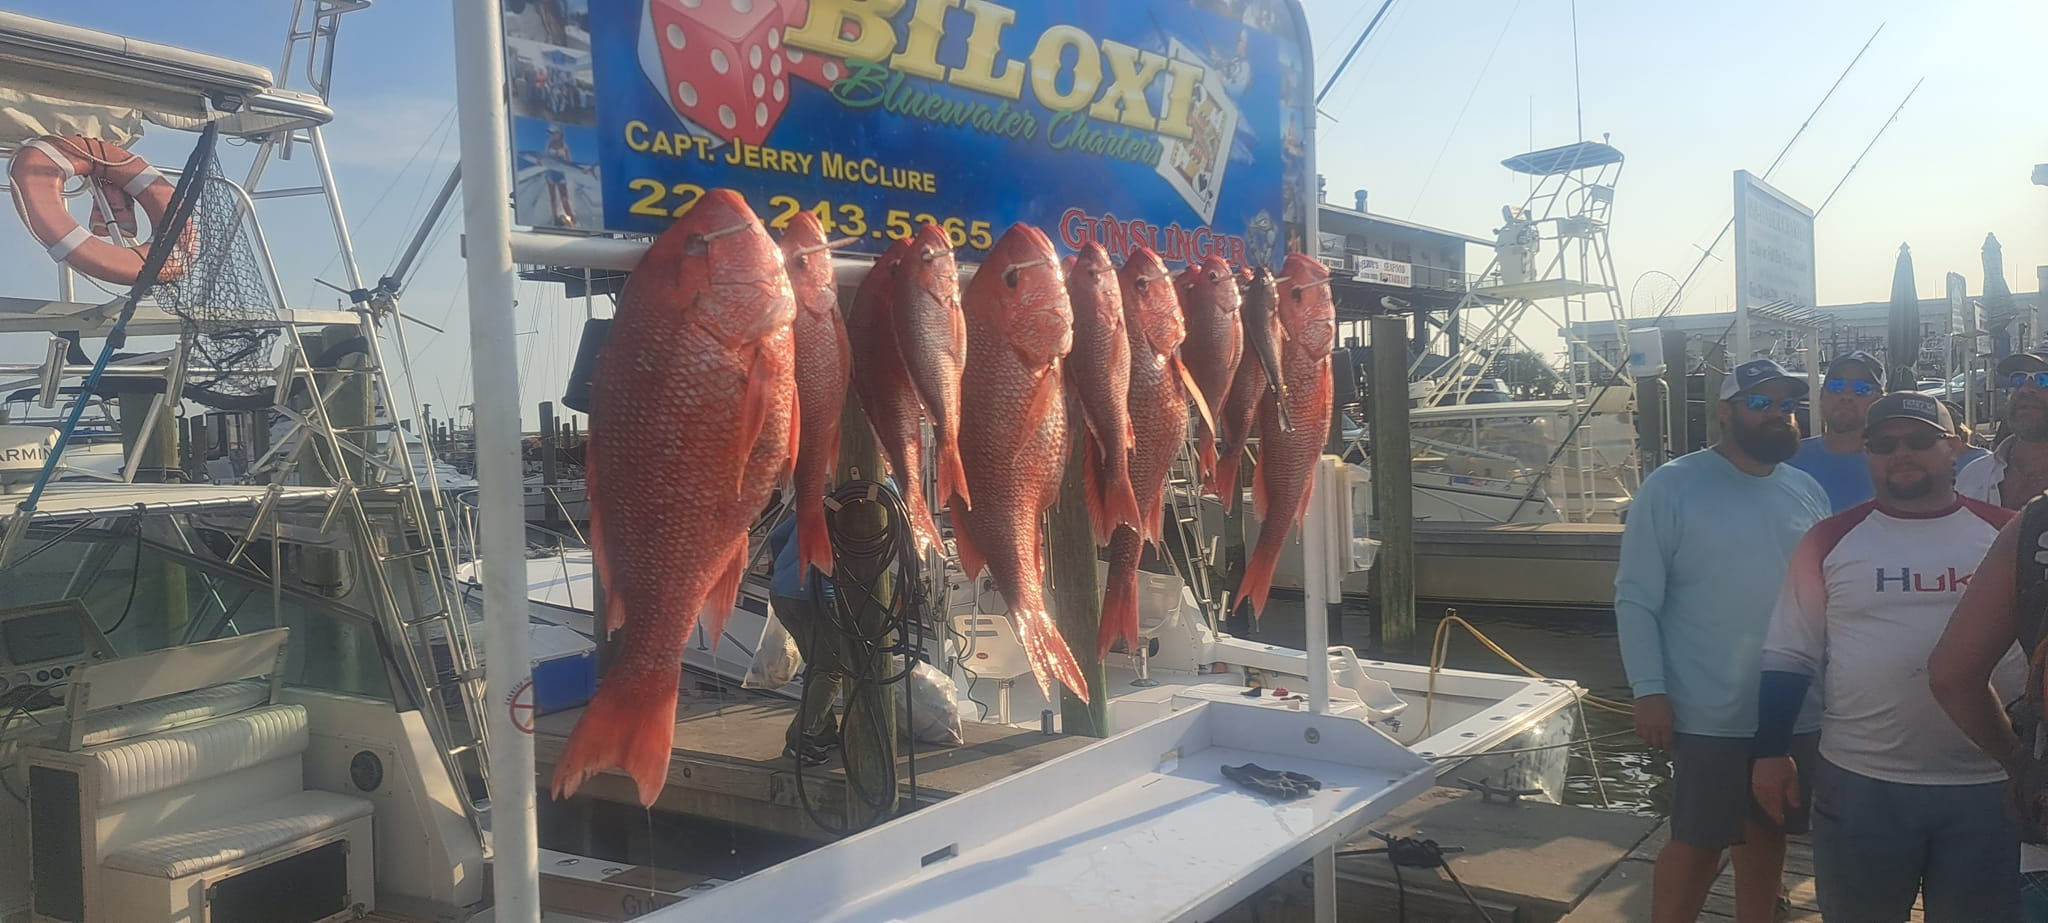 Biloxi Fishing Report fishing report coverpicture